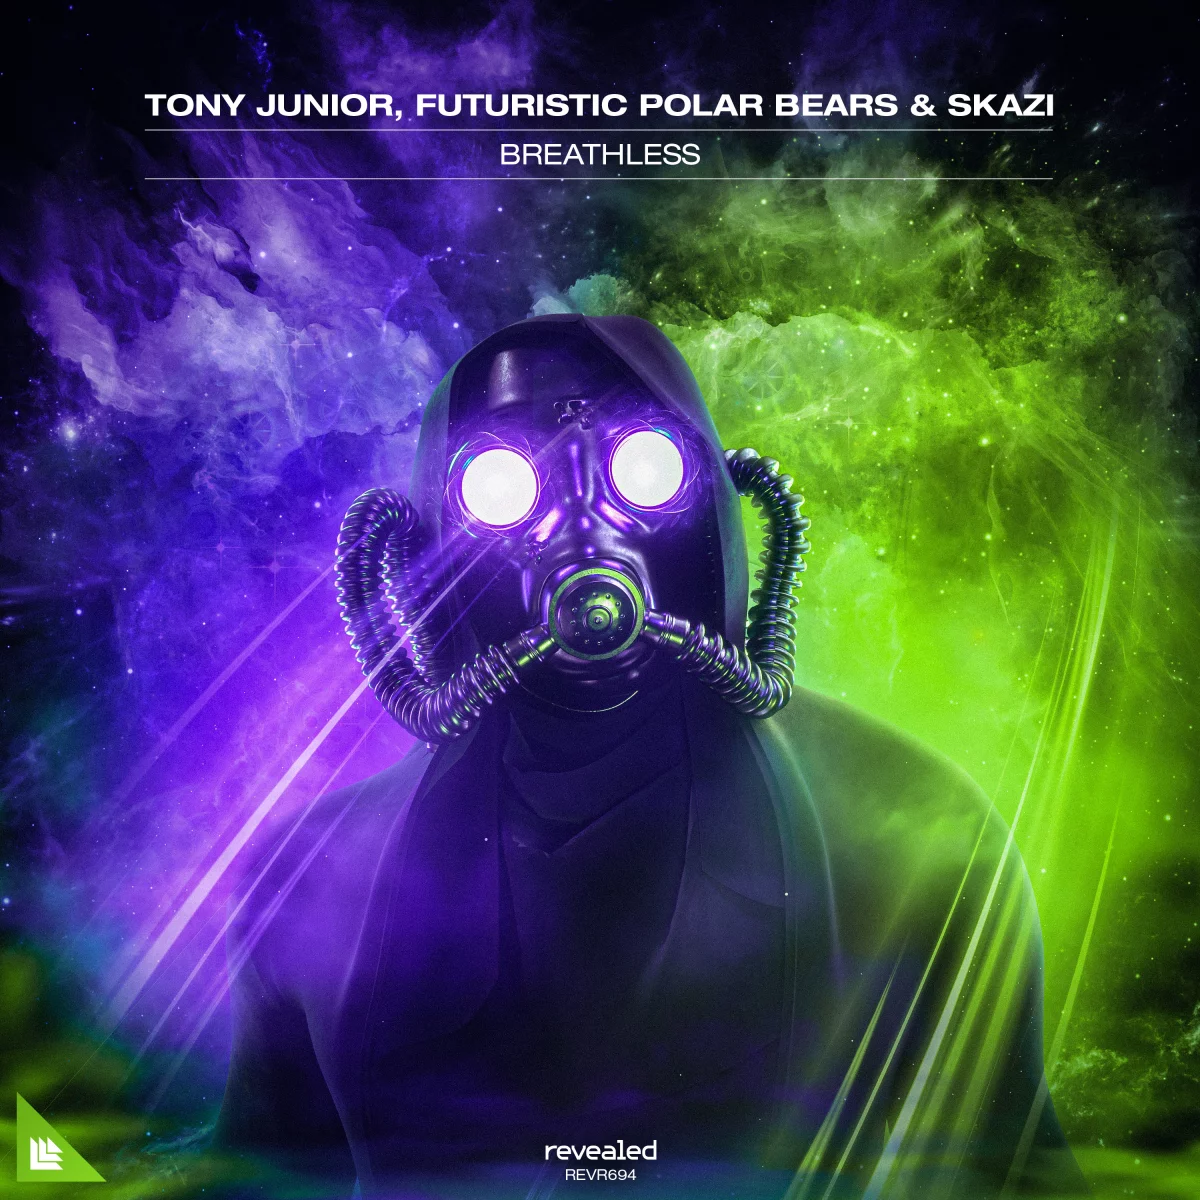 Breathless - Tony Junior⁠⁠, Futuristic Polar Bears⁠⁠ & SKAZI⁠